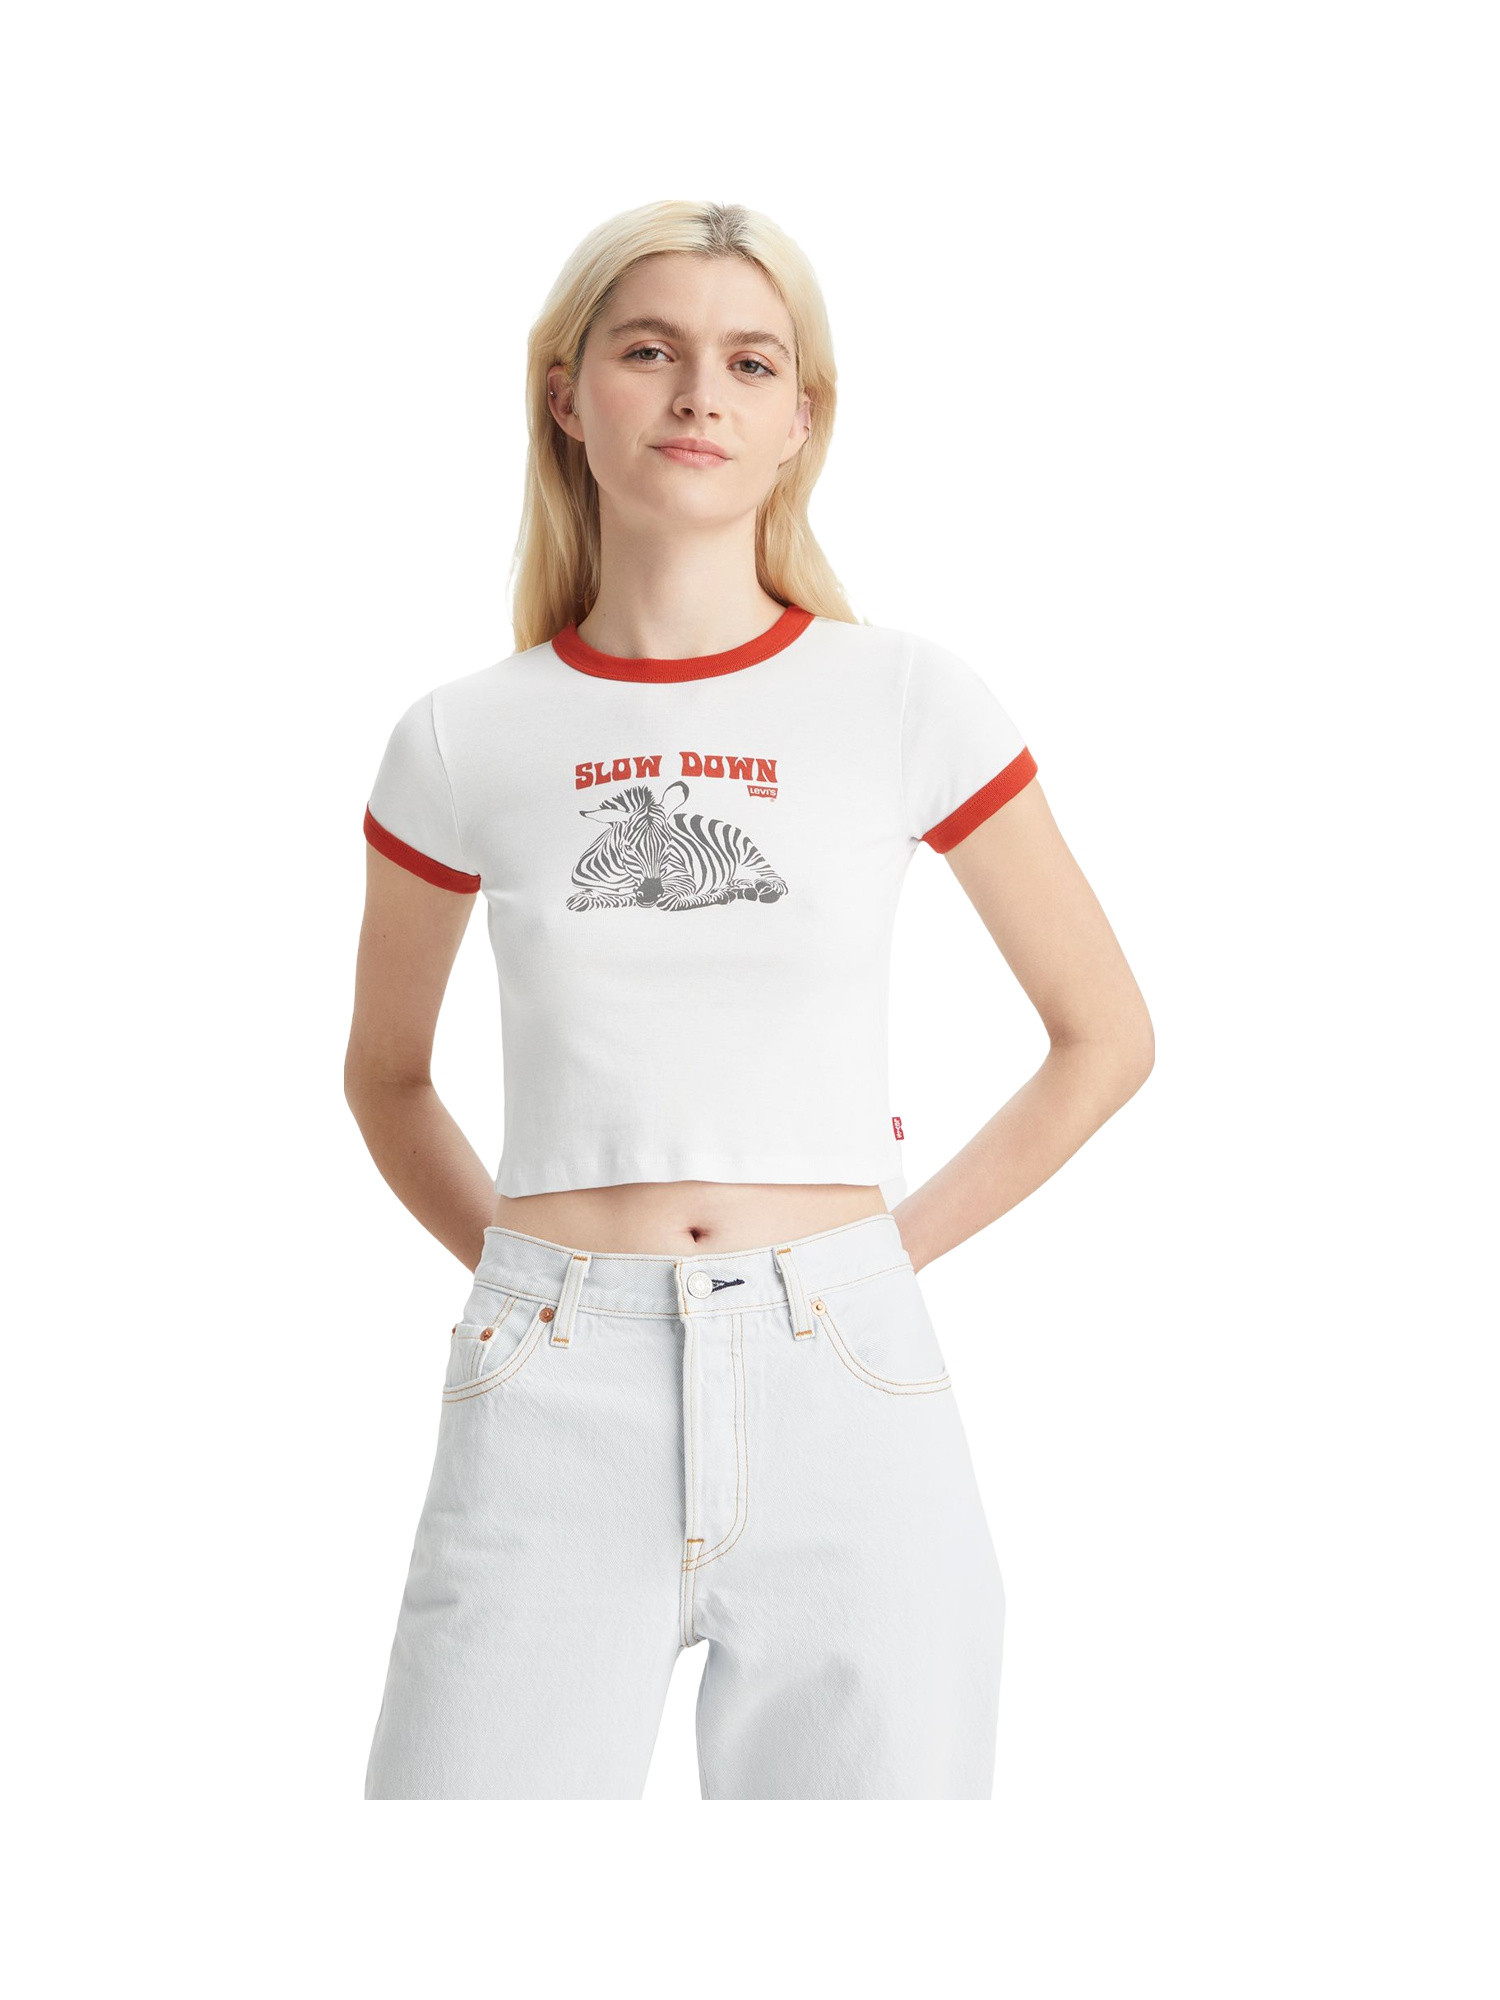 Levi's - ringer mini printed t-shirt, Red, large image number 2